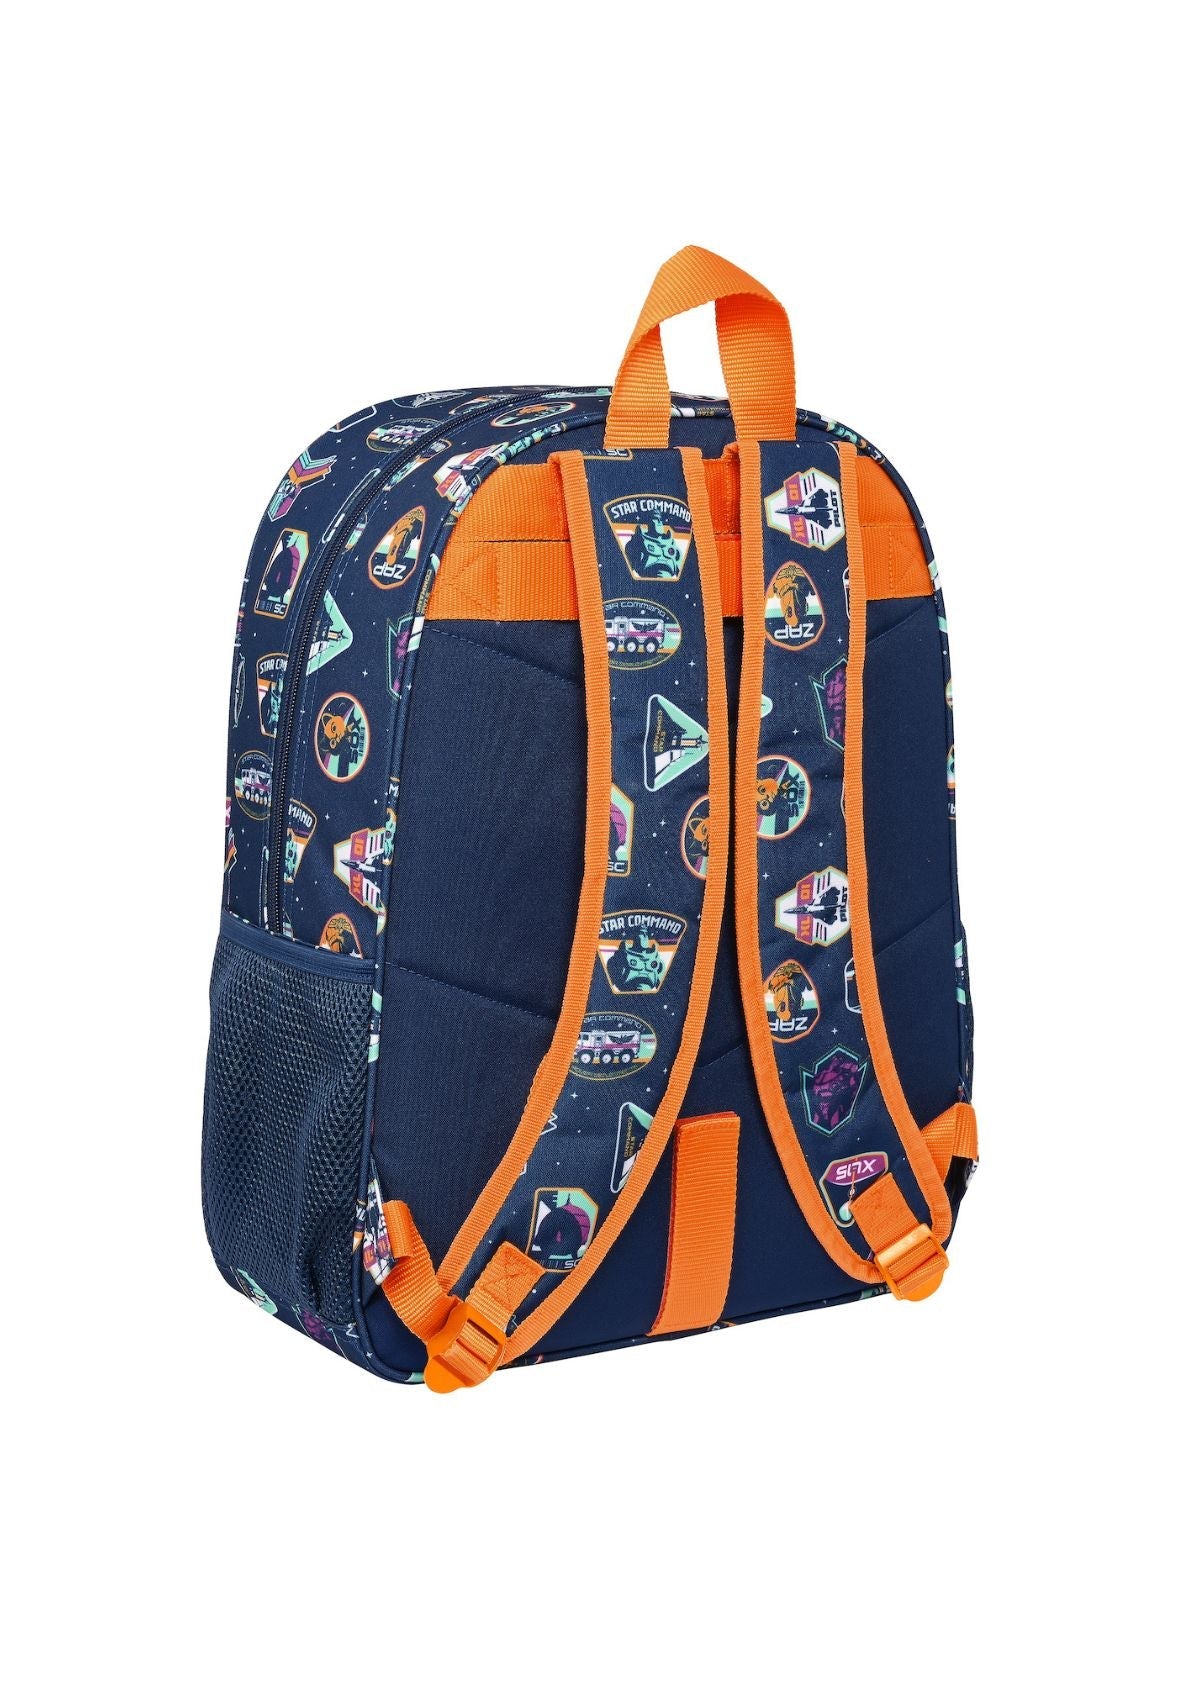 Safta Large Backpack Buzz Lightyear back